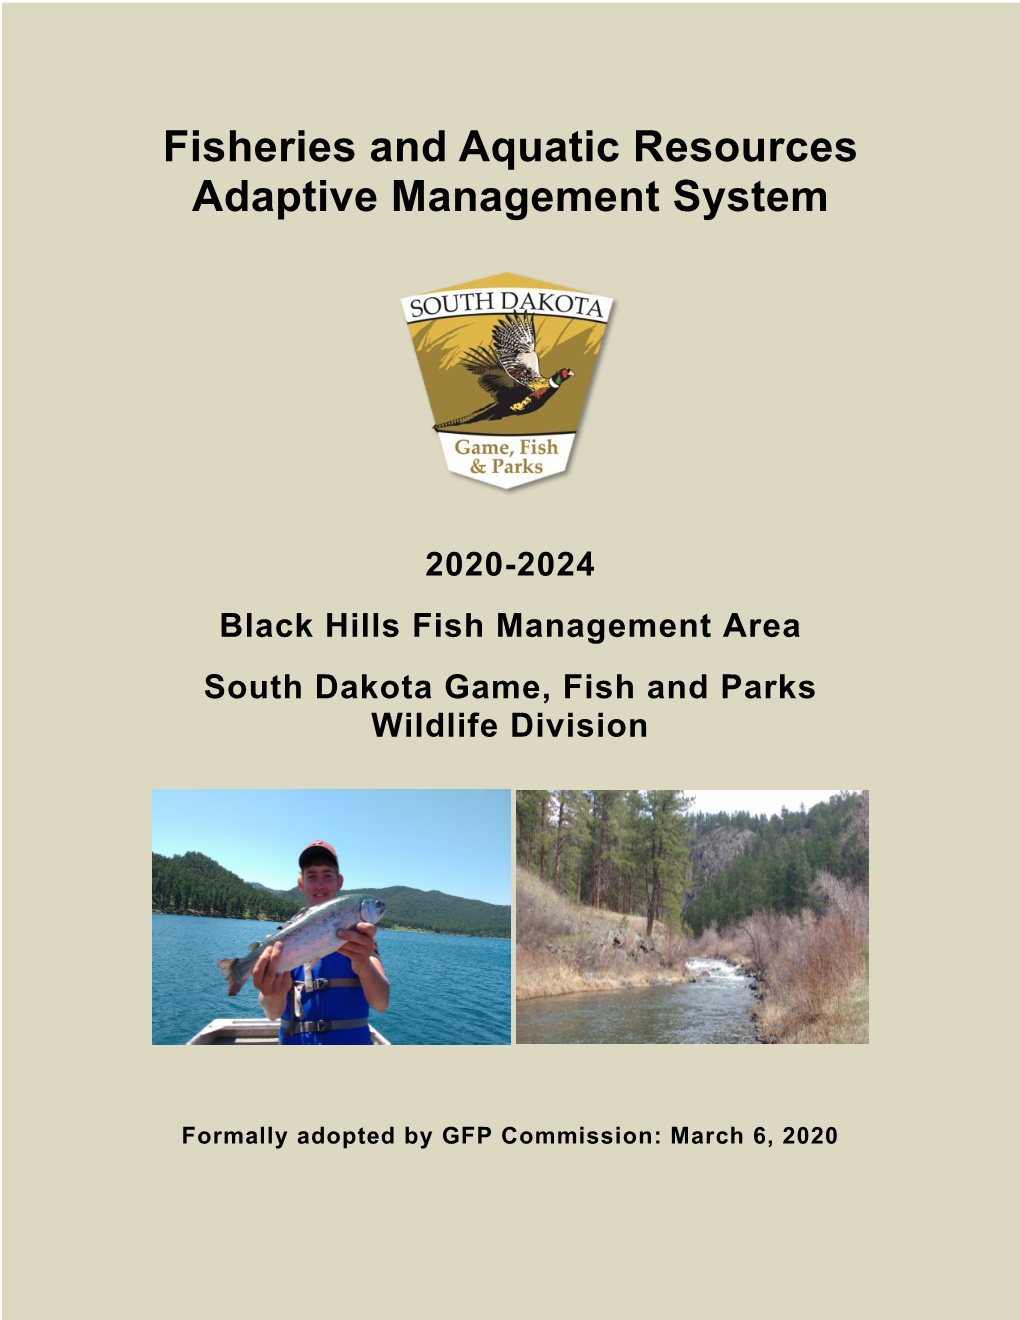 Black Hills Fisheries Management Area (BHFMA)